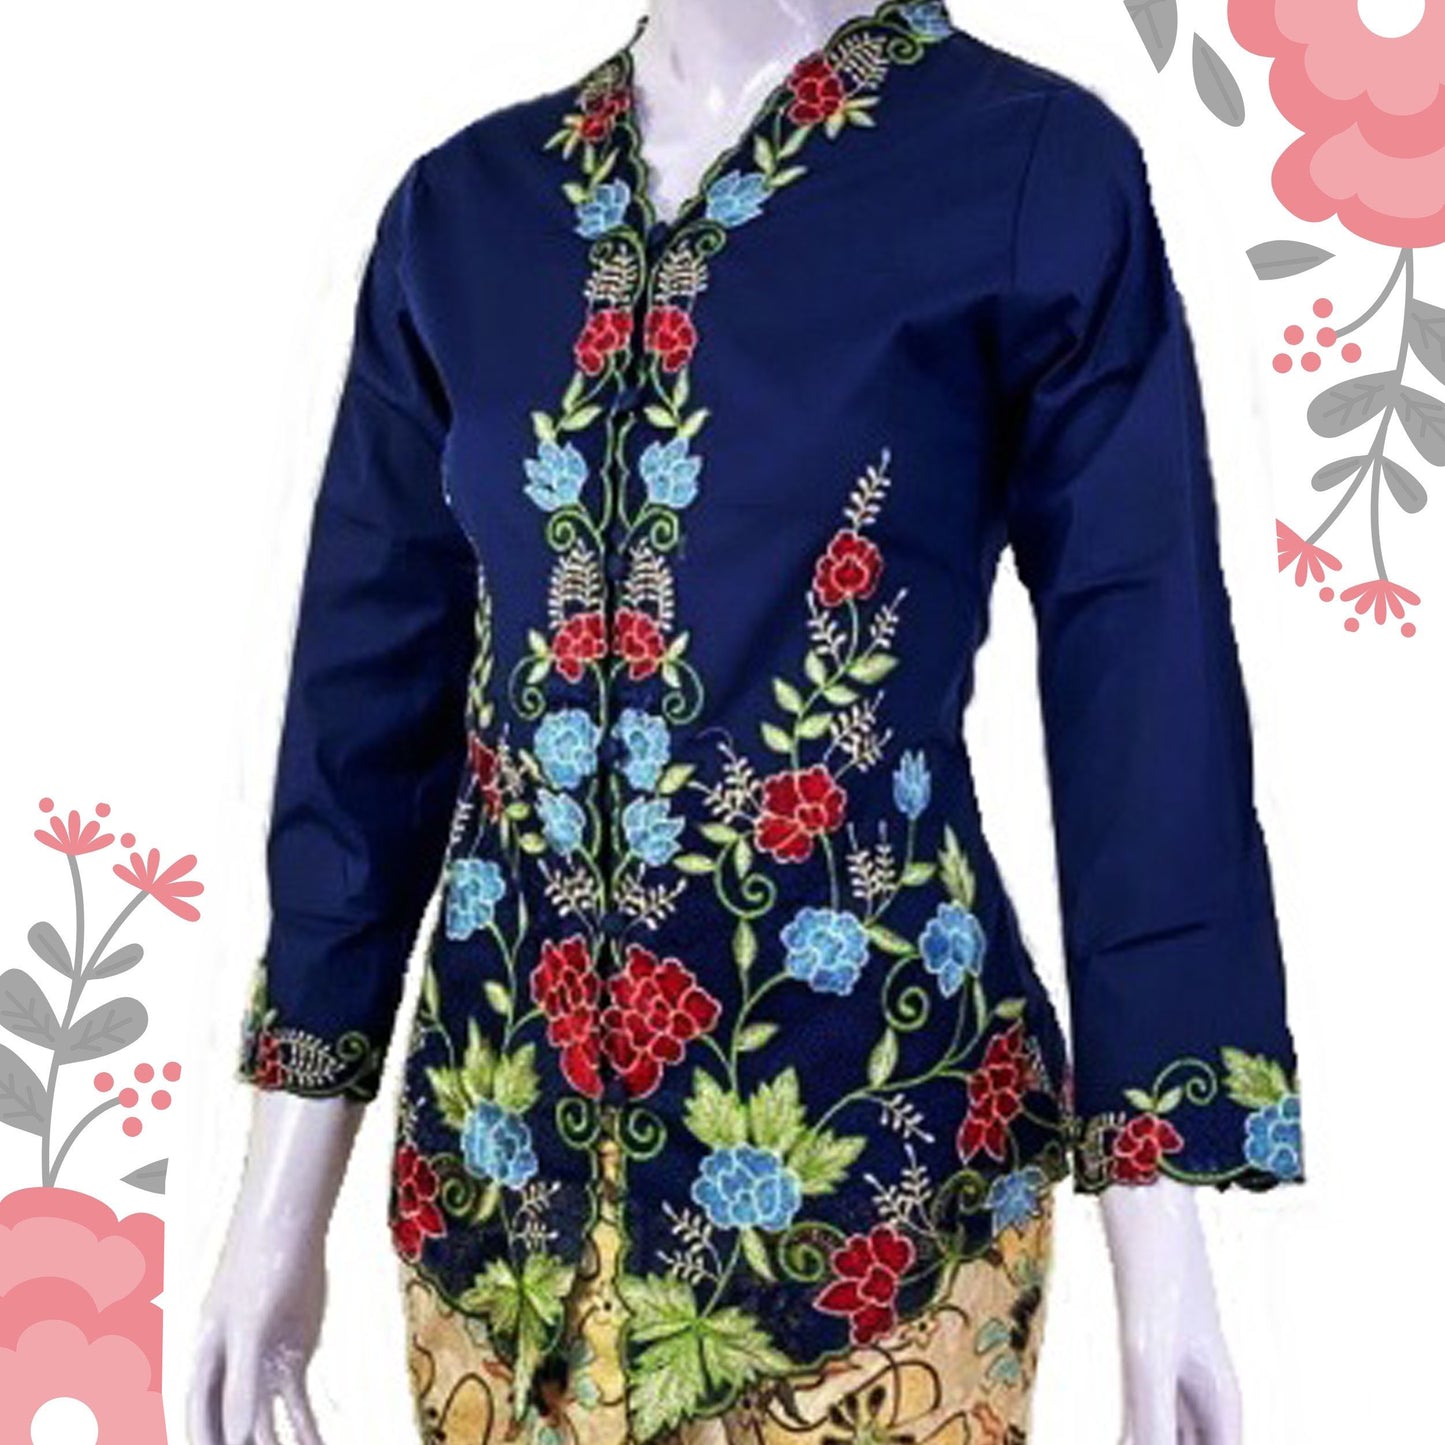 Blue navy kebaya dress, kebaya stretchy cotton, kebaya embroidery size XS, S, M, L, XL